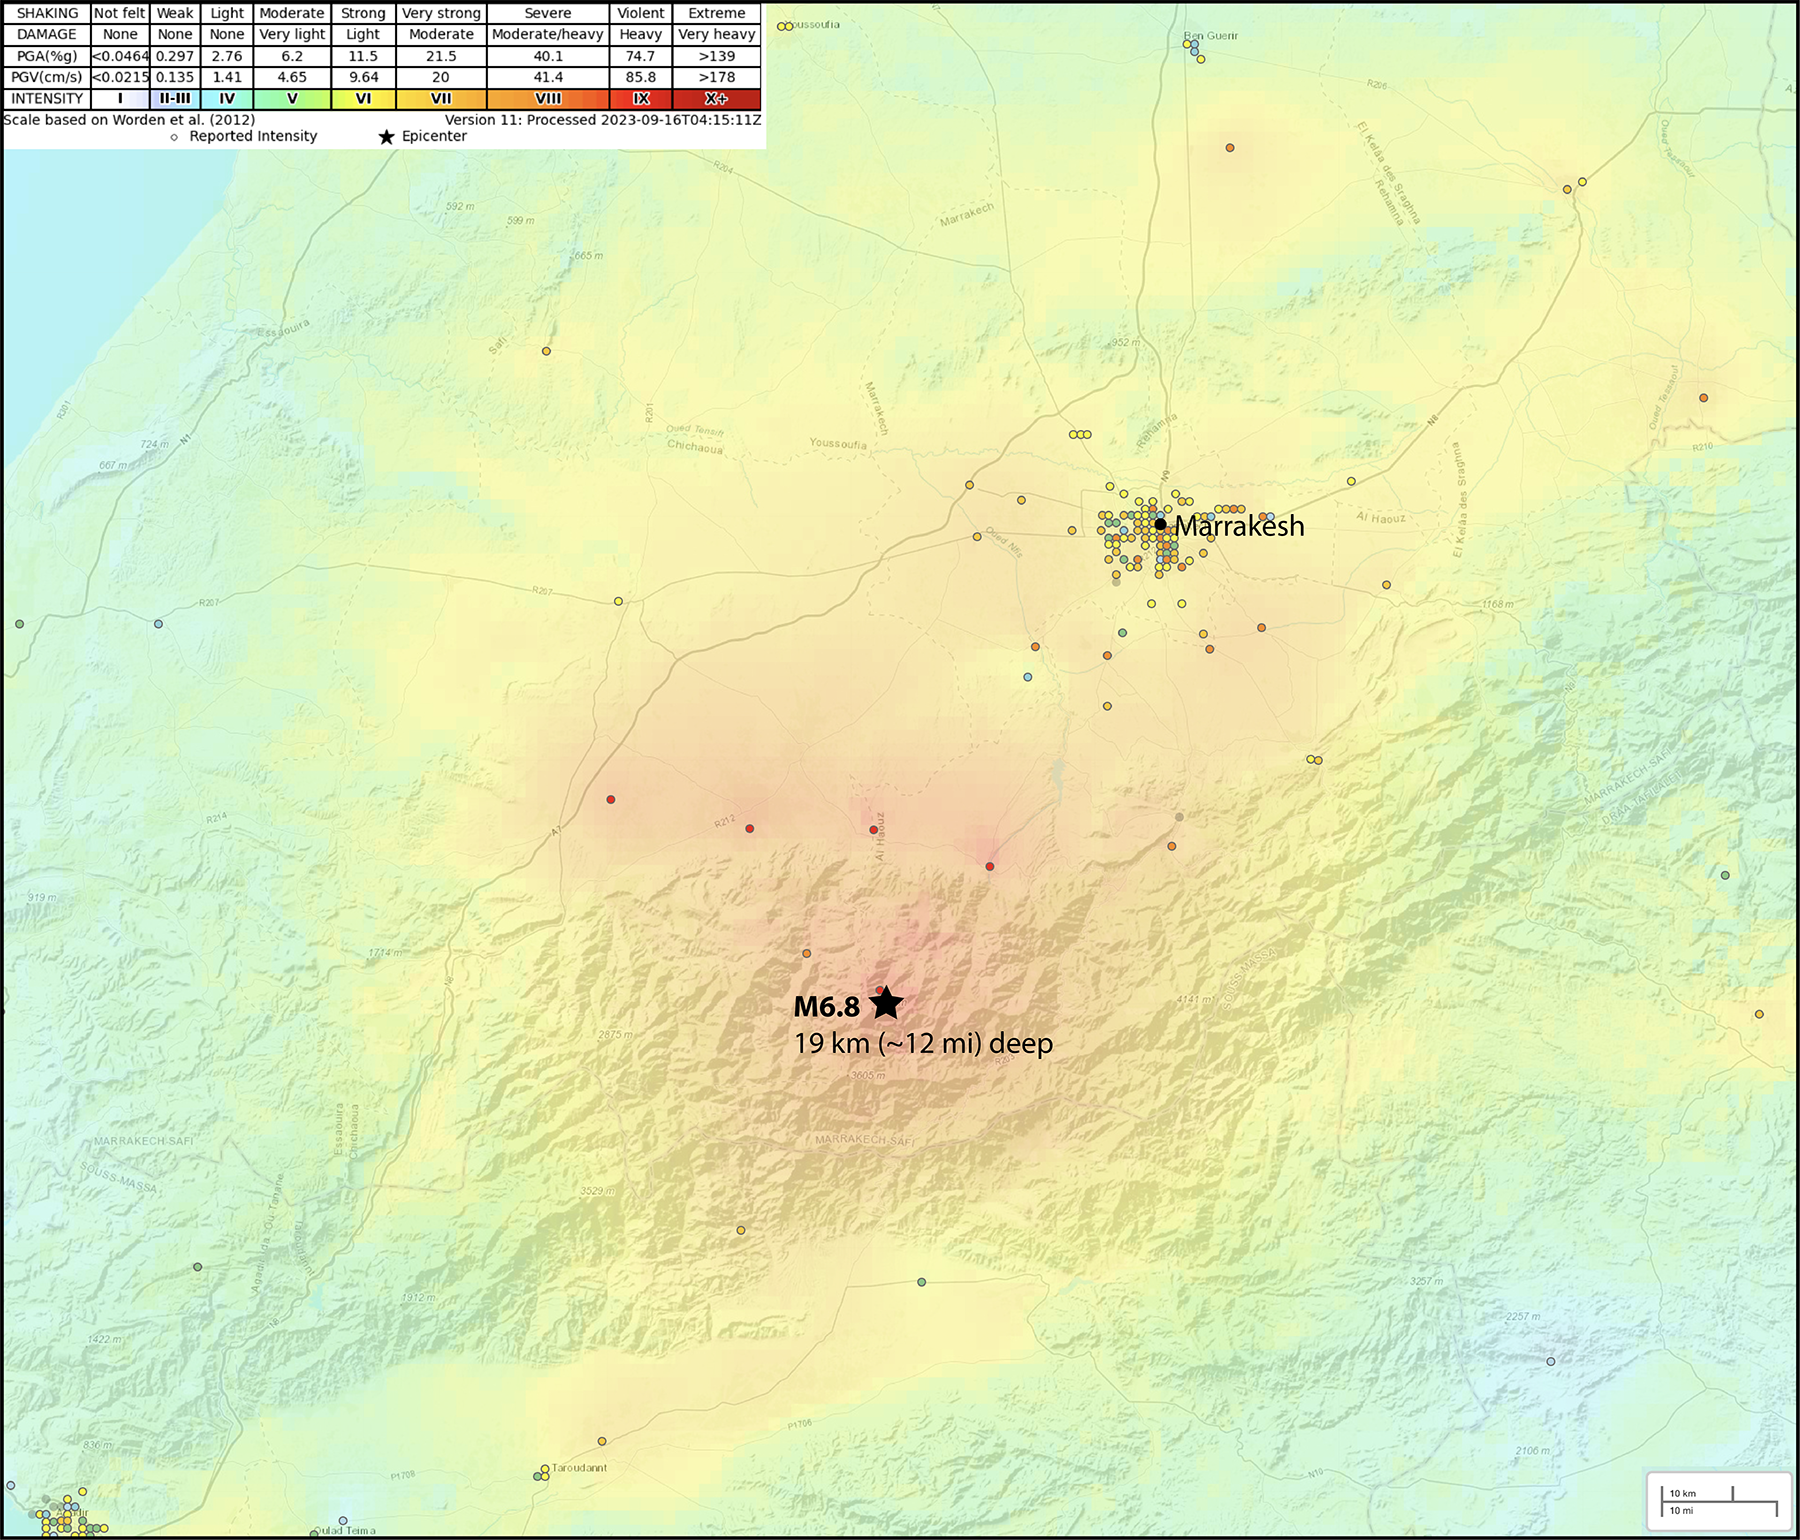 Shakemap intensity for M6.8 Morocco earthquake